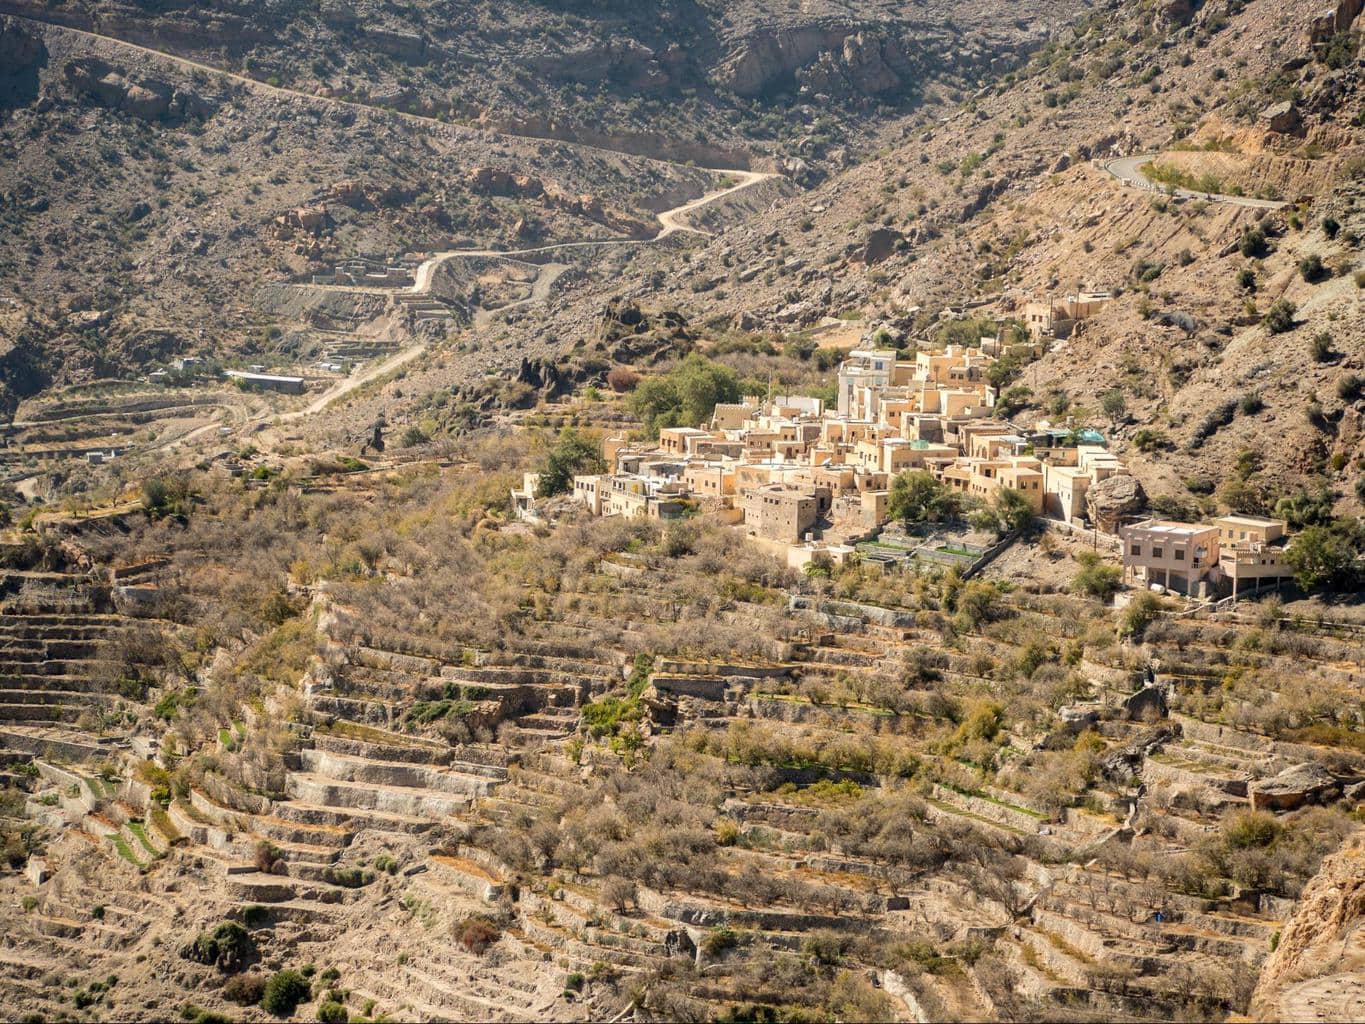 Jabal Akhdar falaj system